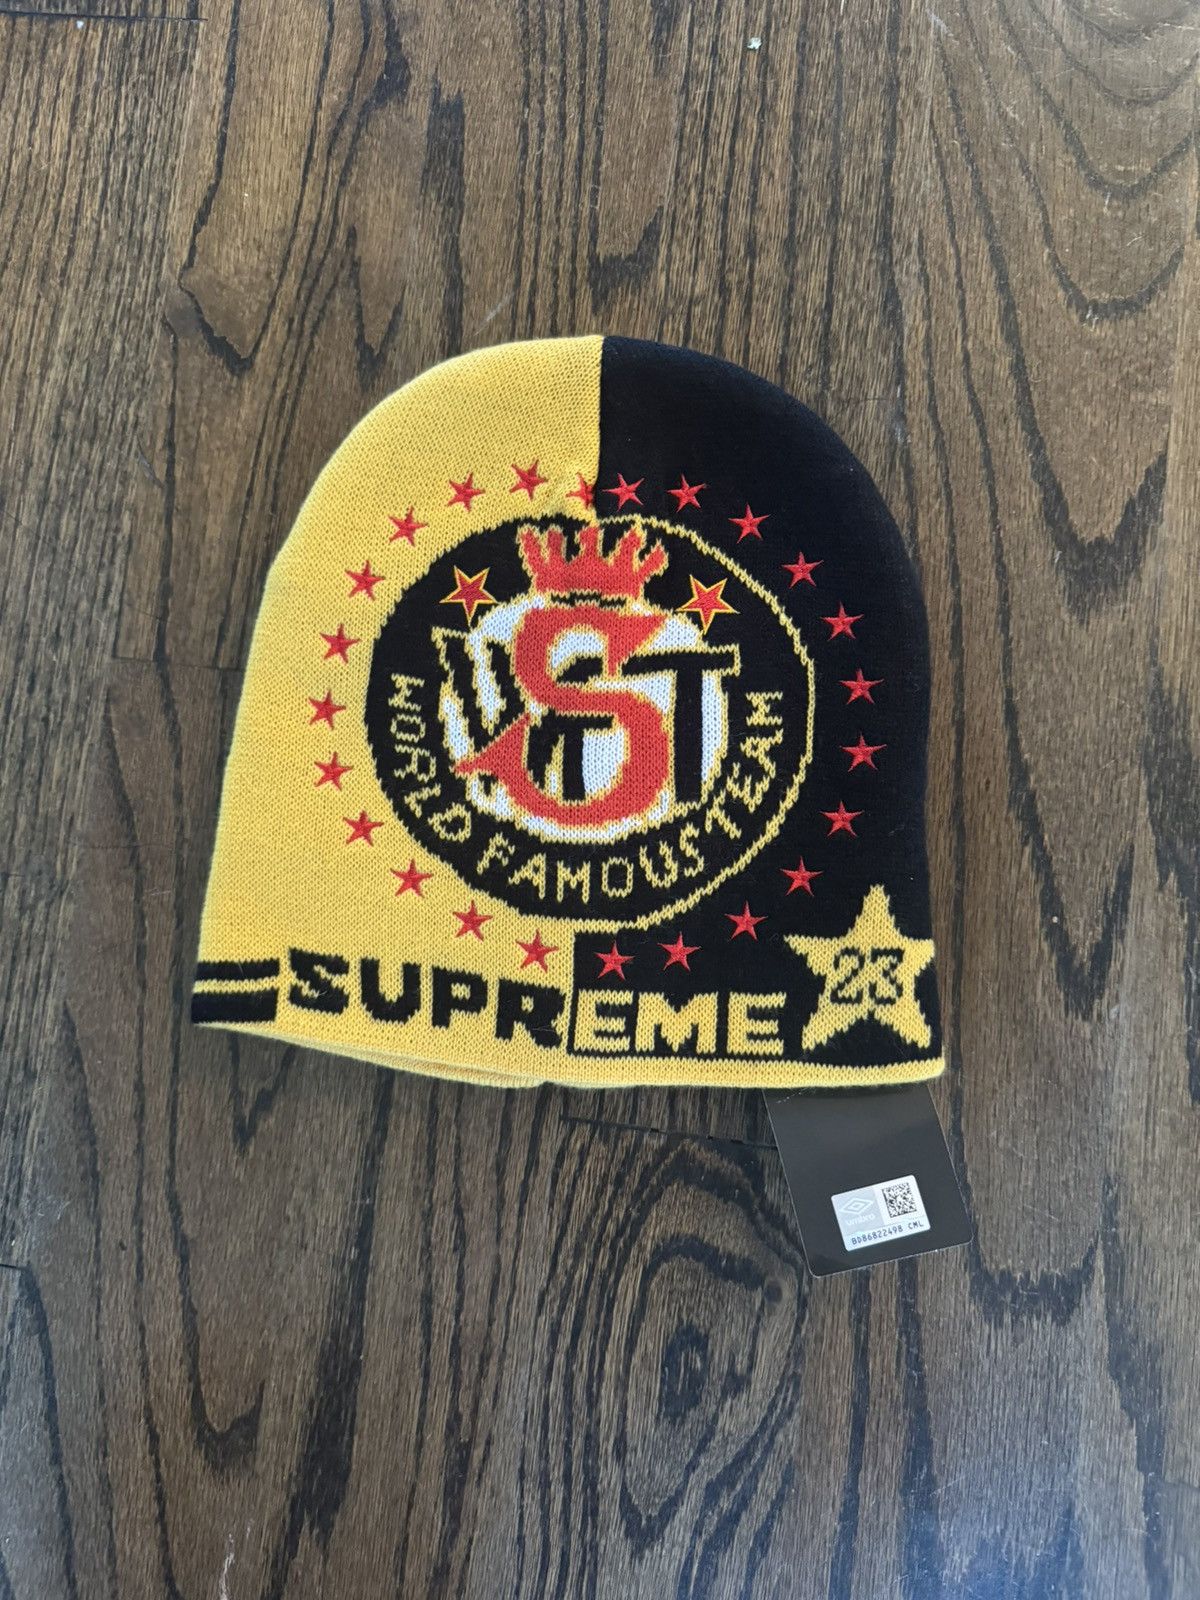 Supreme Supreme x Umbro Beanie | Grailed